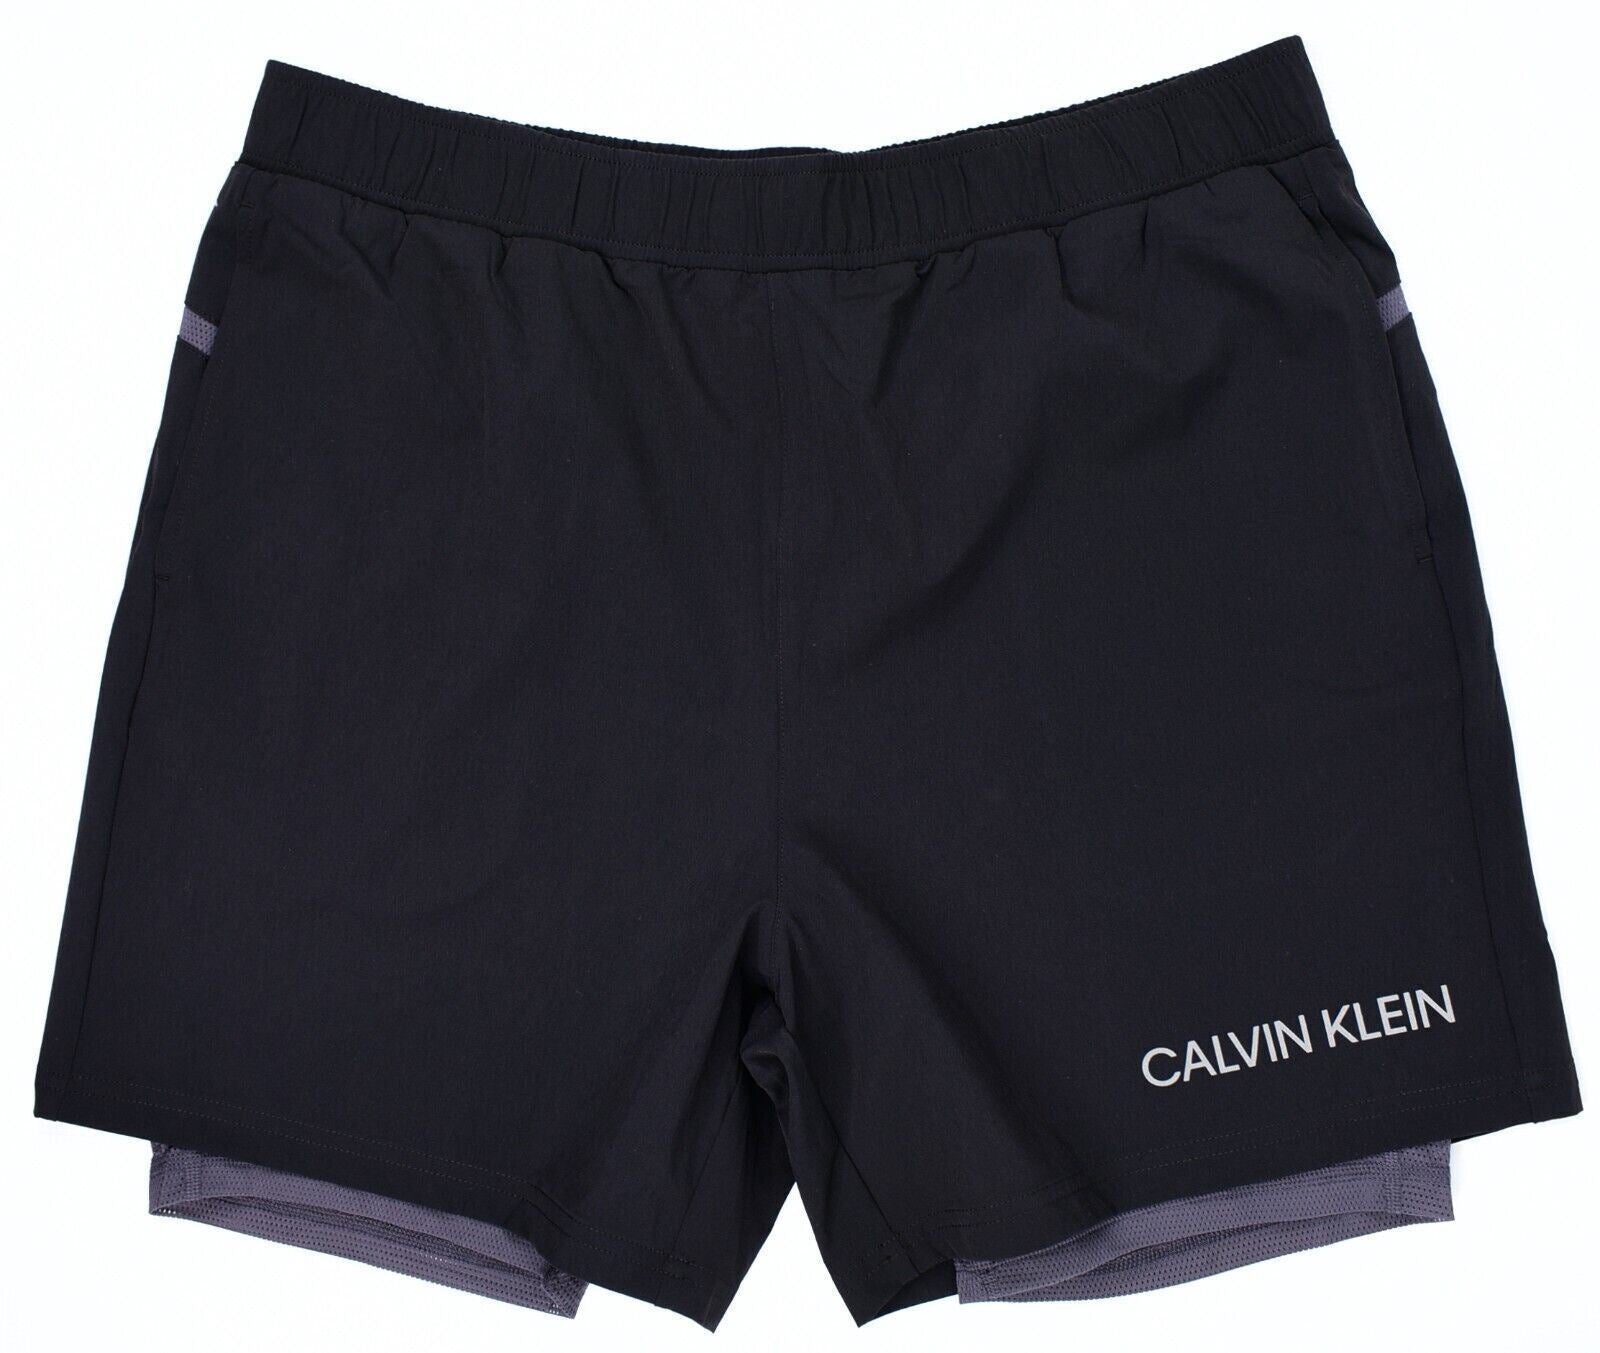 CALVIN KLEIN Performance: Men's 2-in 1 Workout Shorts, Black/Grey, size MEDIUM